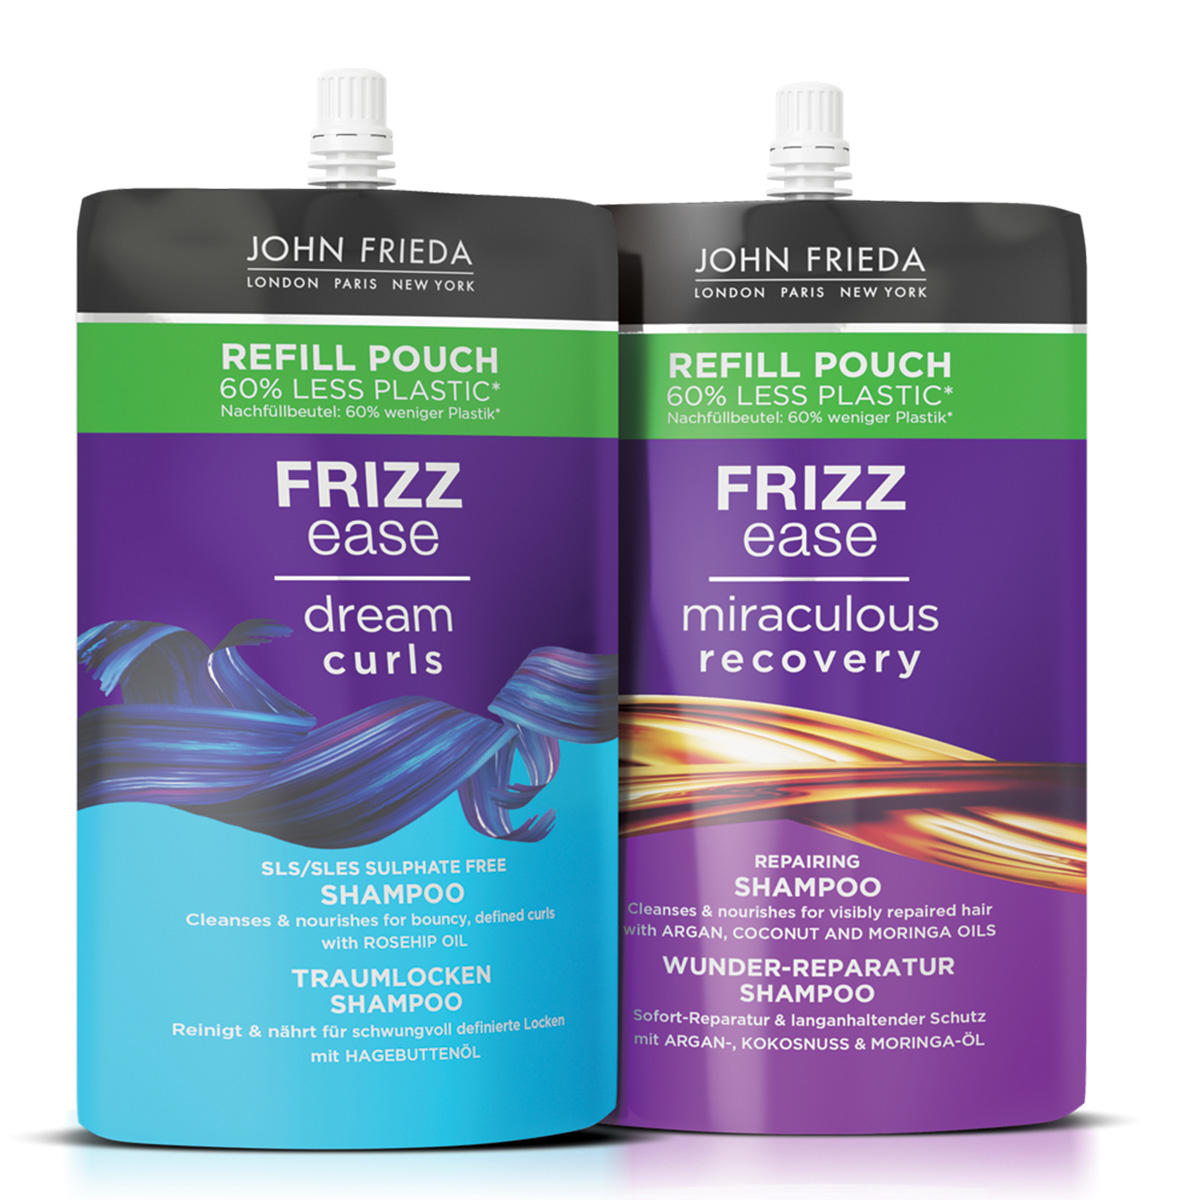 JOHN FRIEDA Frizz Ease Riccia da sogno - Ricarica di shampoo 500 ml - 6